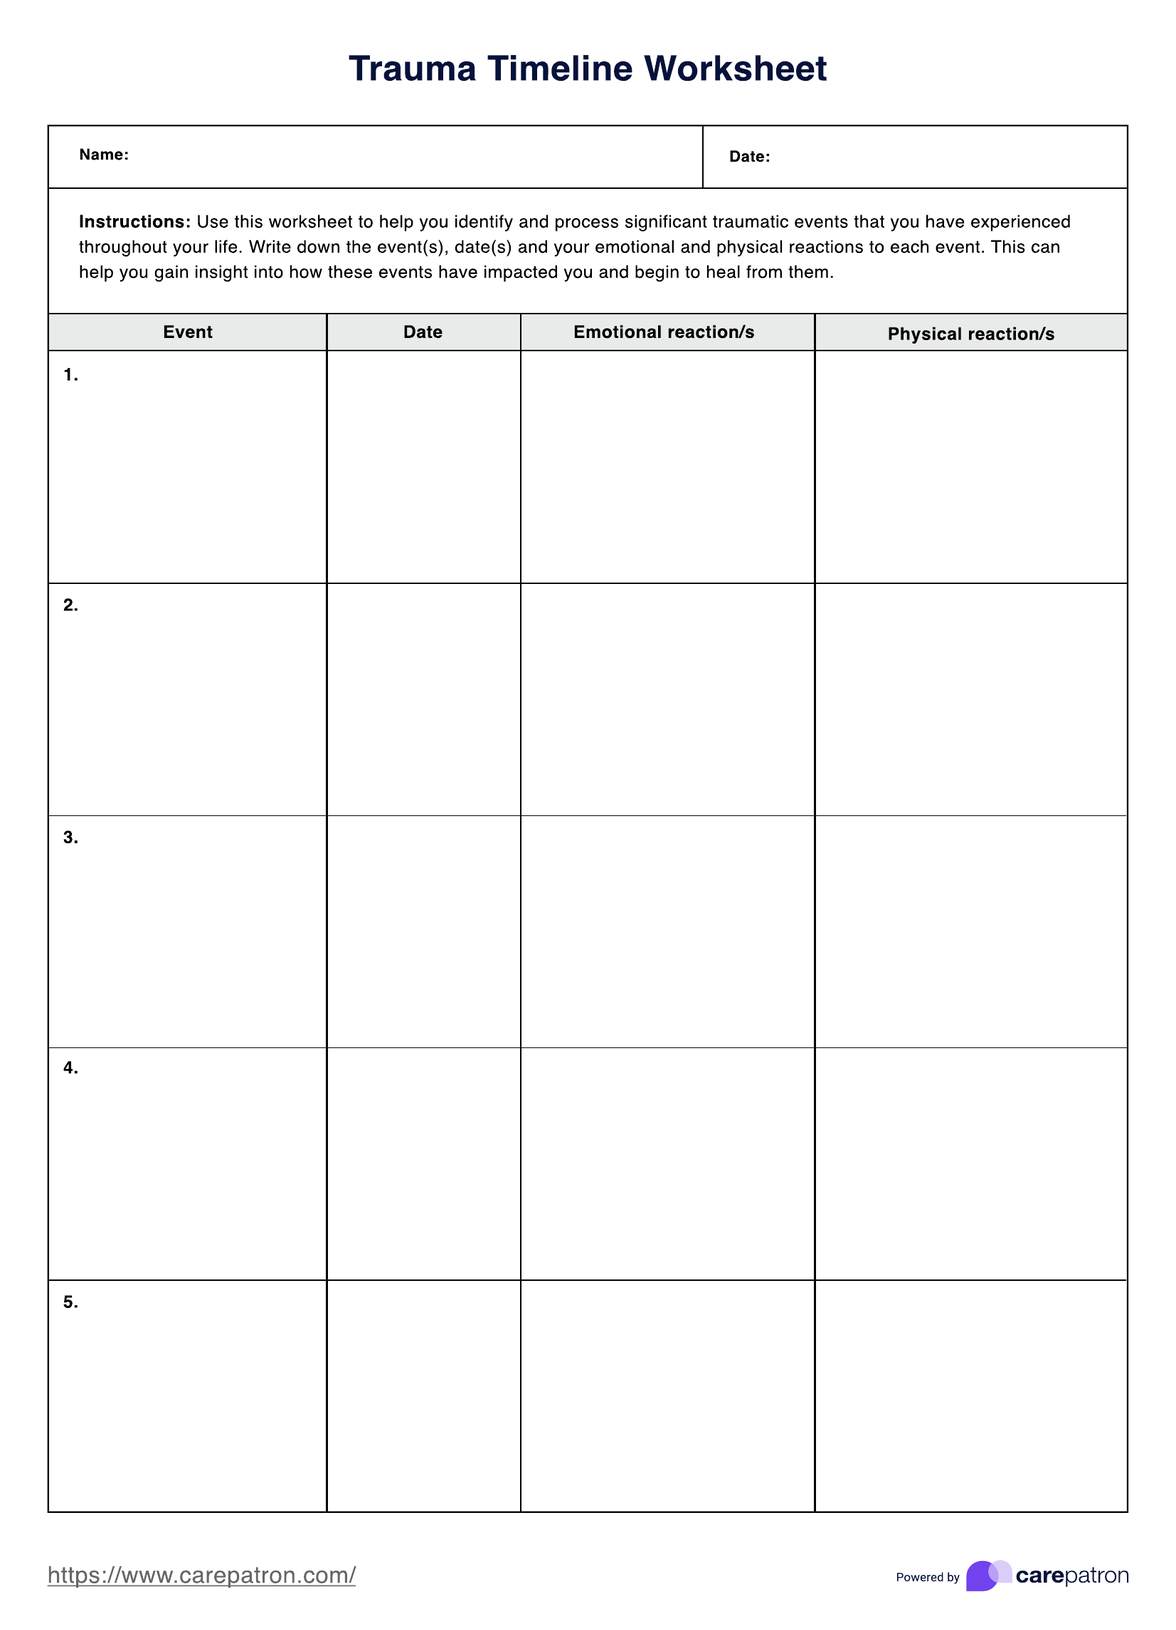 Trauma Timeline Worksheet PDF Example